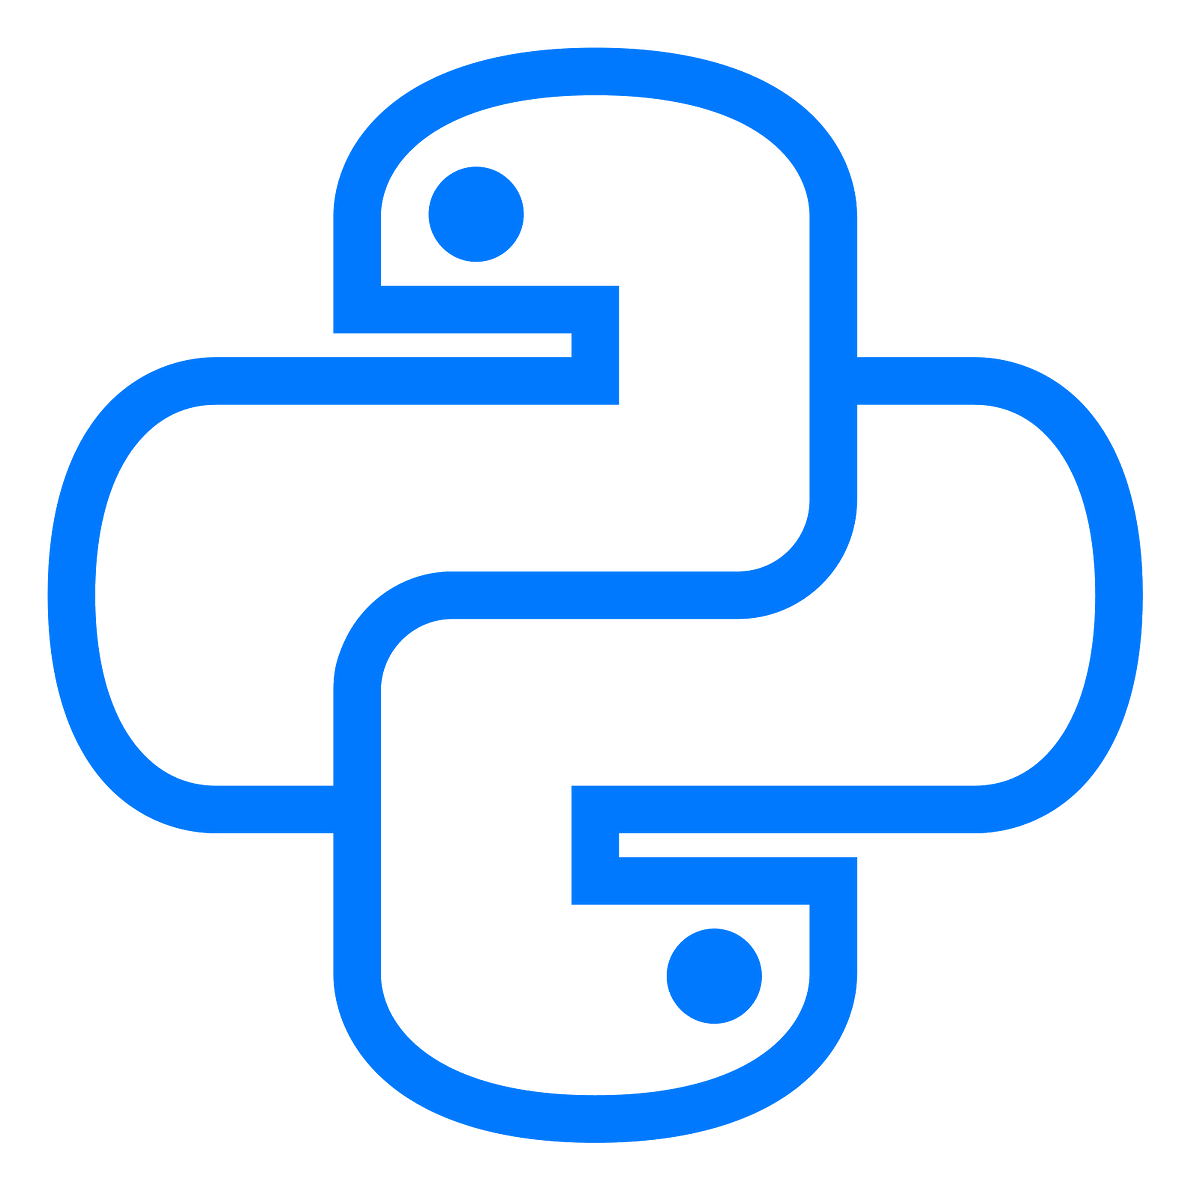 Логотип языка питон. Python язык программирования лого. Пайтон язык программирования логотип. Питон язык программирования лого. Иконки языков программирования питон.